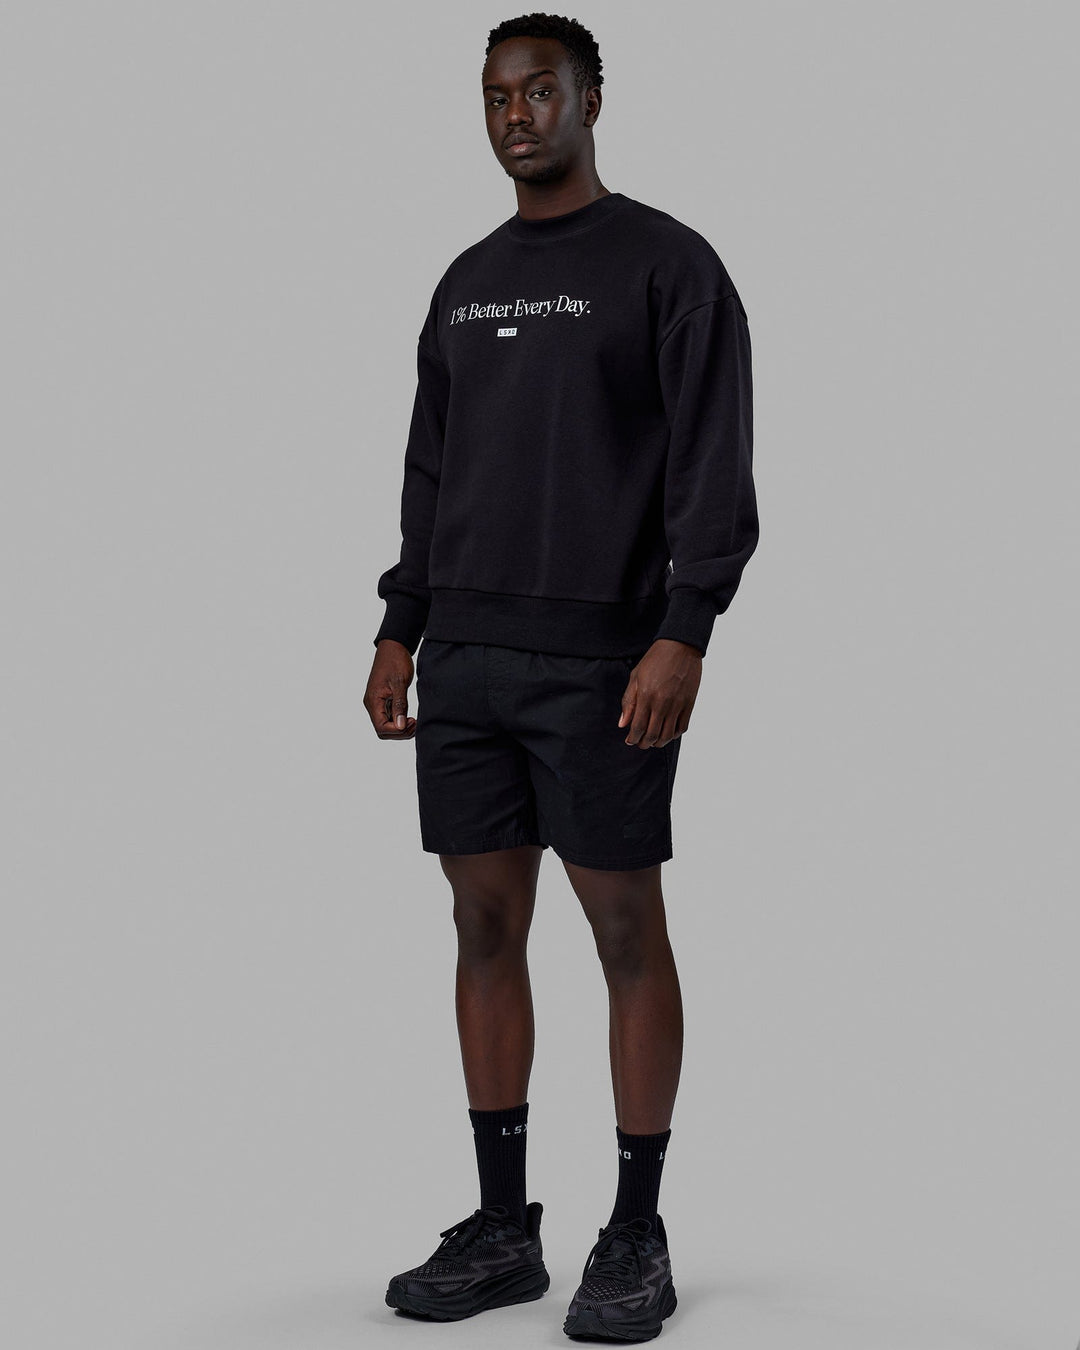 Man wearing Unisex 1% Better Sweater Oversize - Black-White